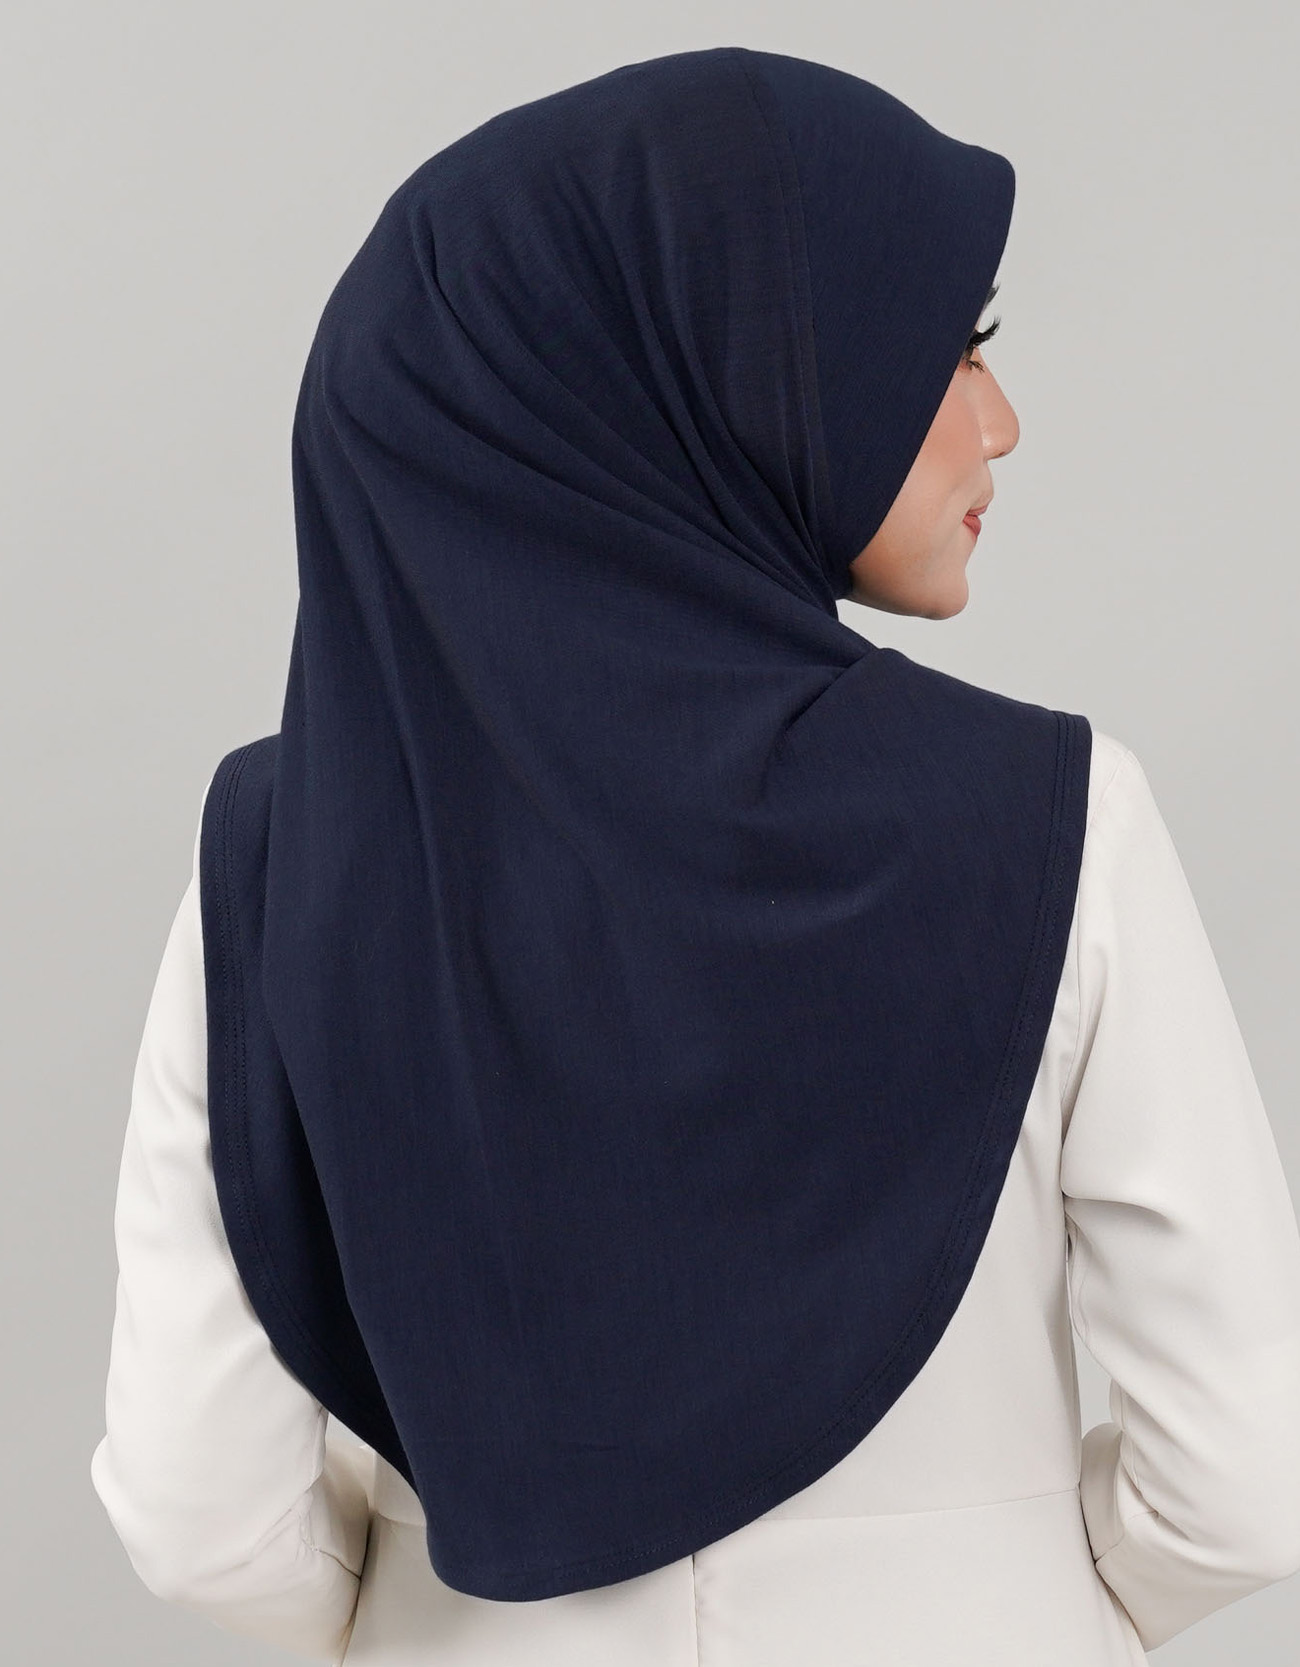 Express Hijab Damia Plain - 06 Navy Blue